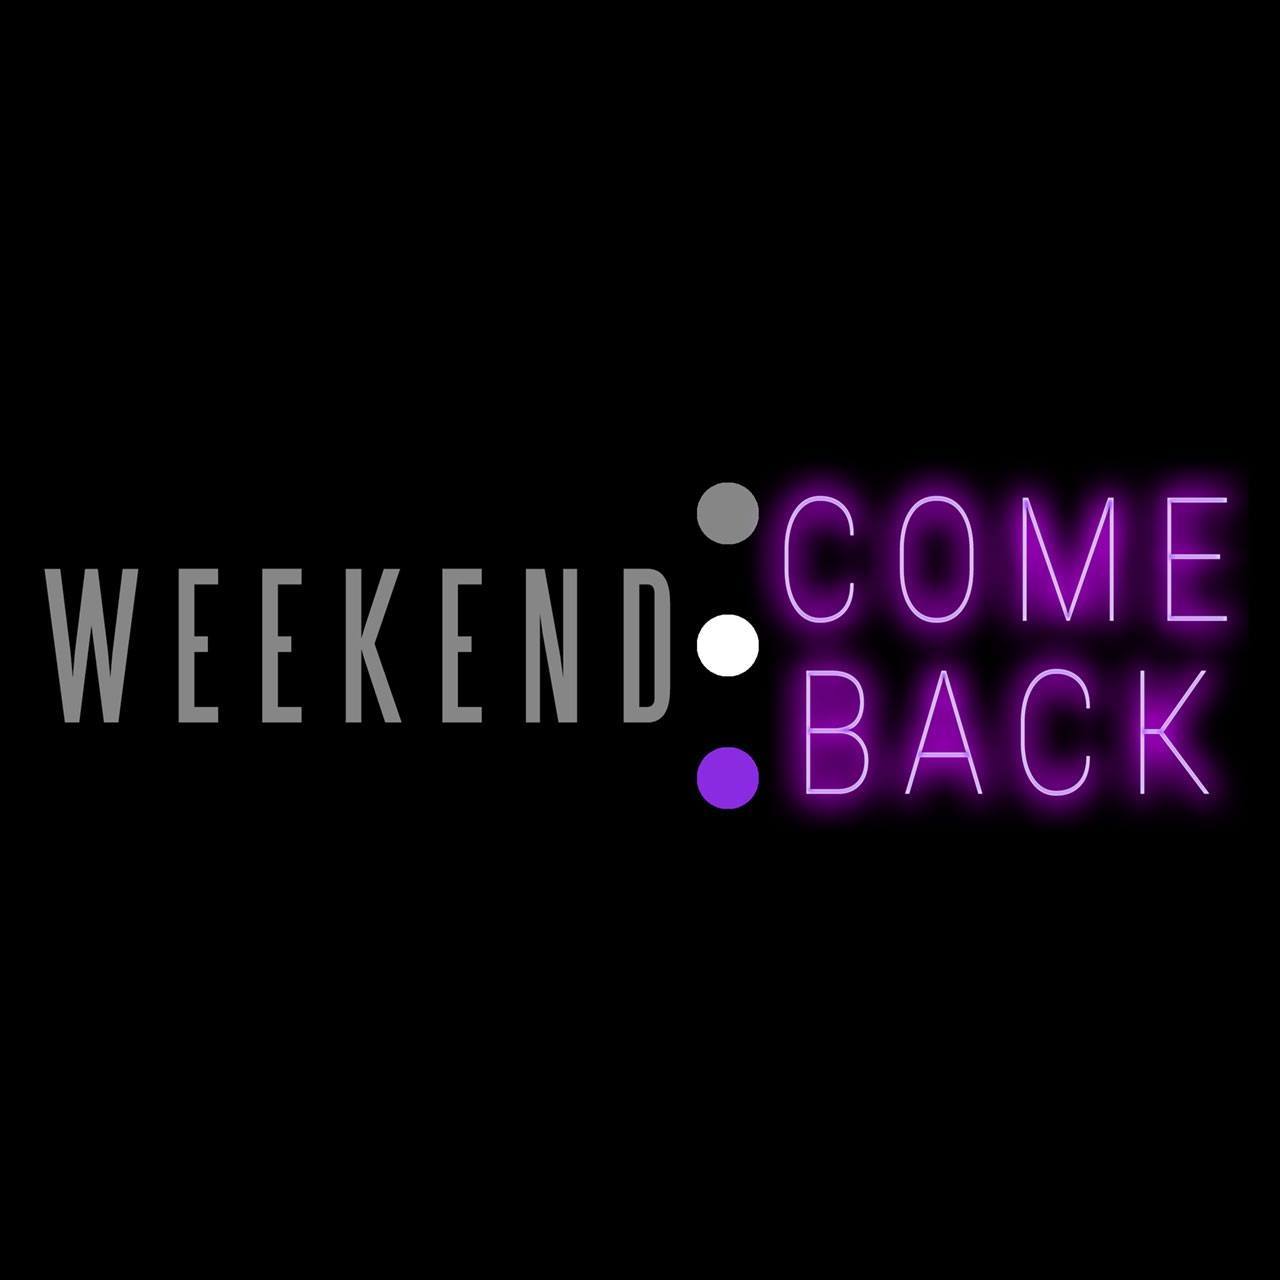 LIVE MUSIC: Weekend Comeback Band